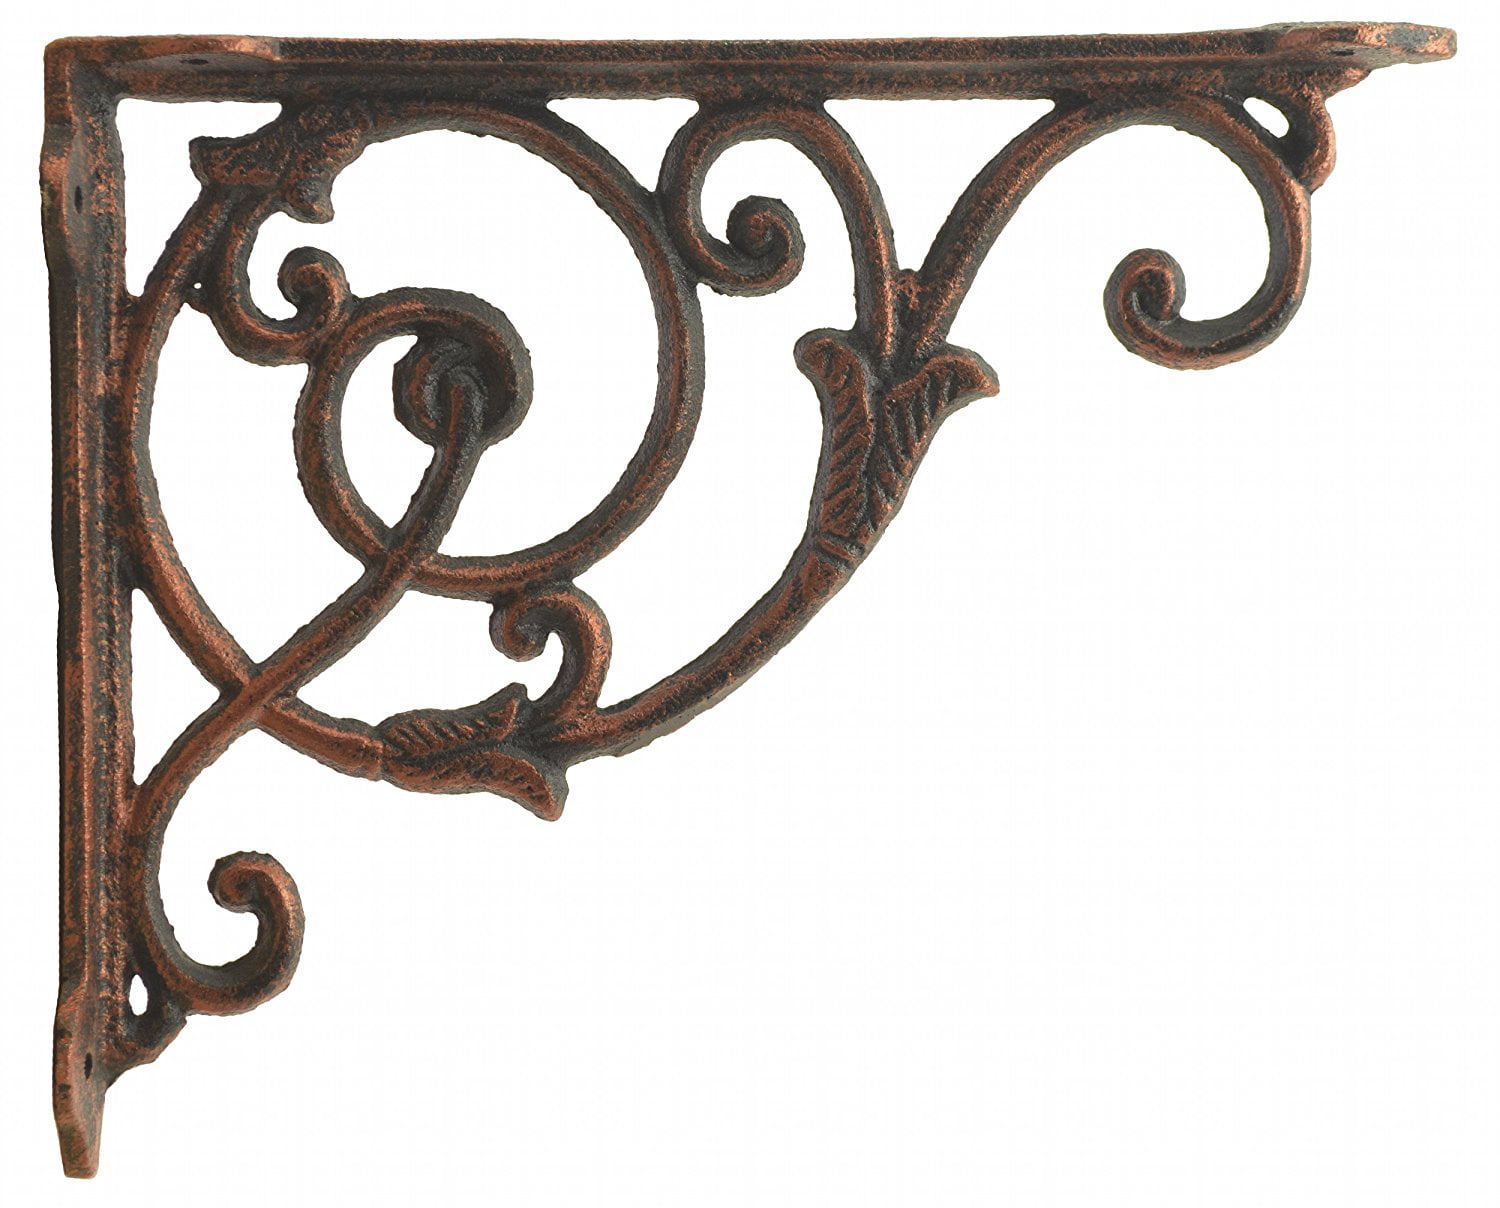 Import Wholesales Decorative Cast Iron Wall Shelf Bracket Ornate Vine Rust 10 Deep